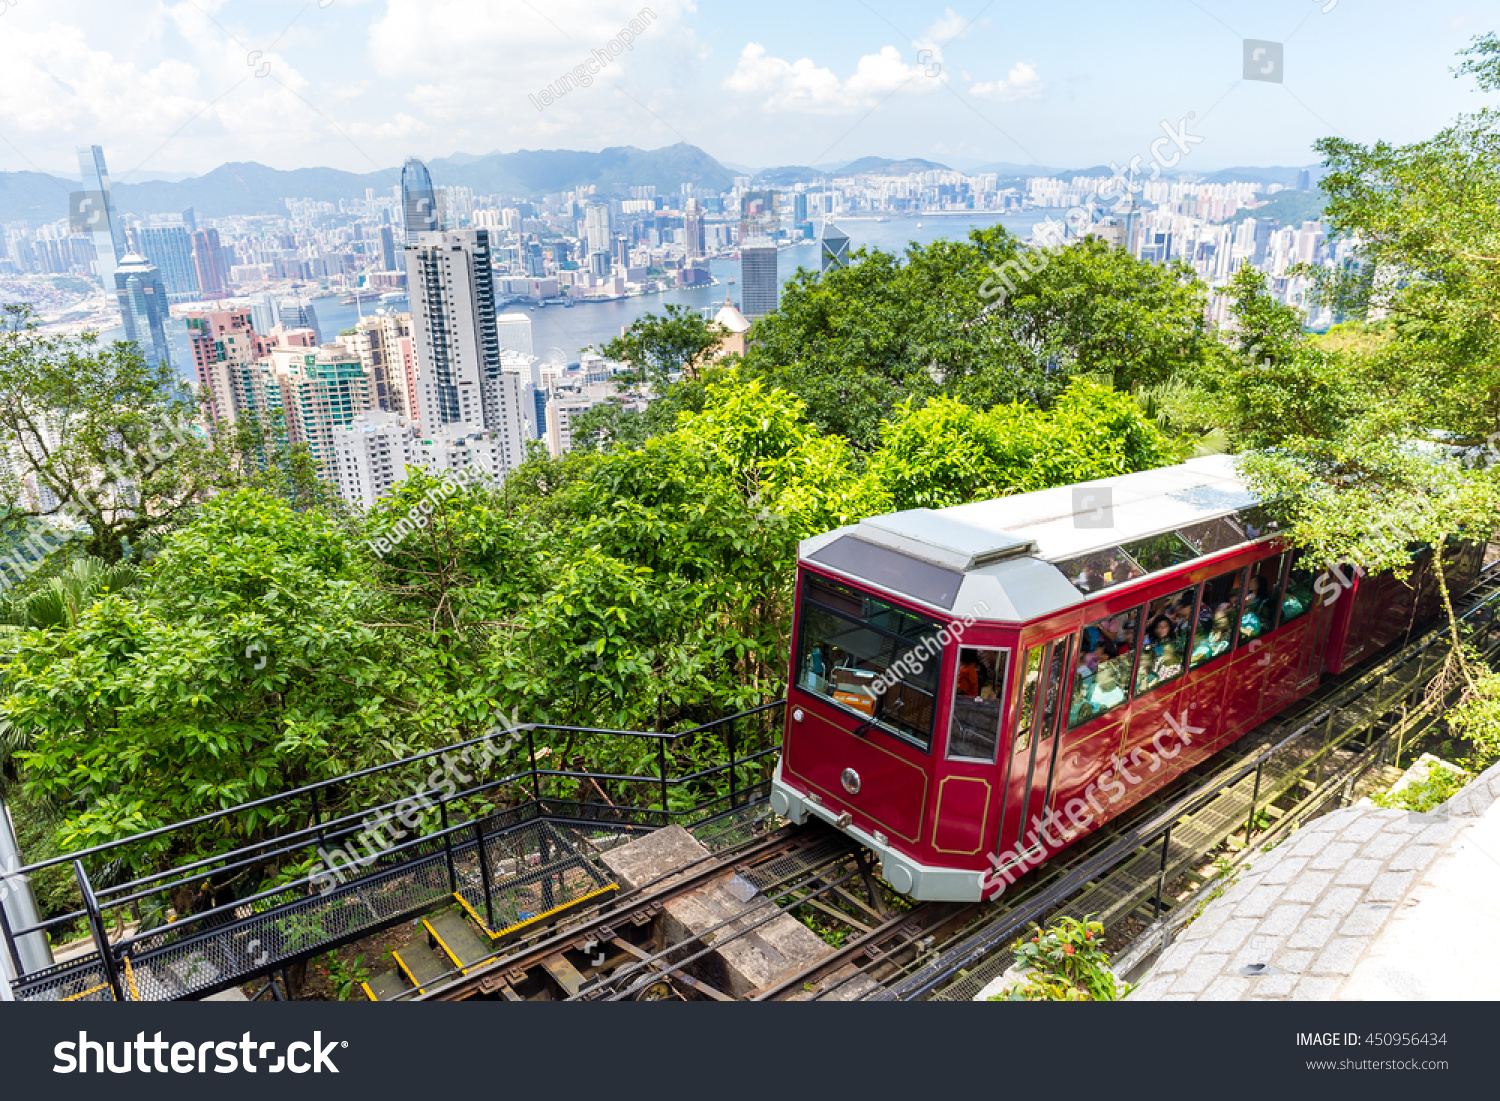 Victoria Peak Tram and Hong Kong city skyline #450956434